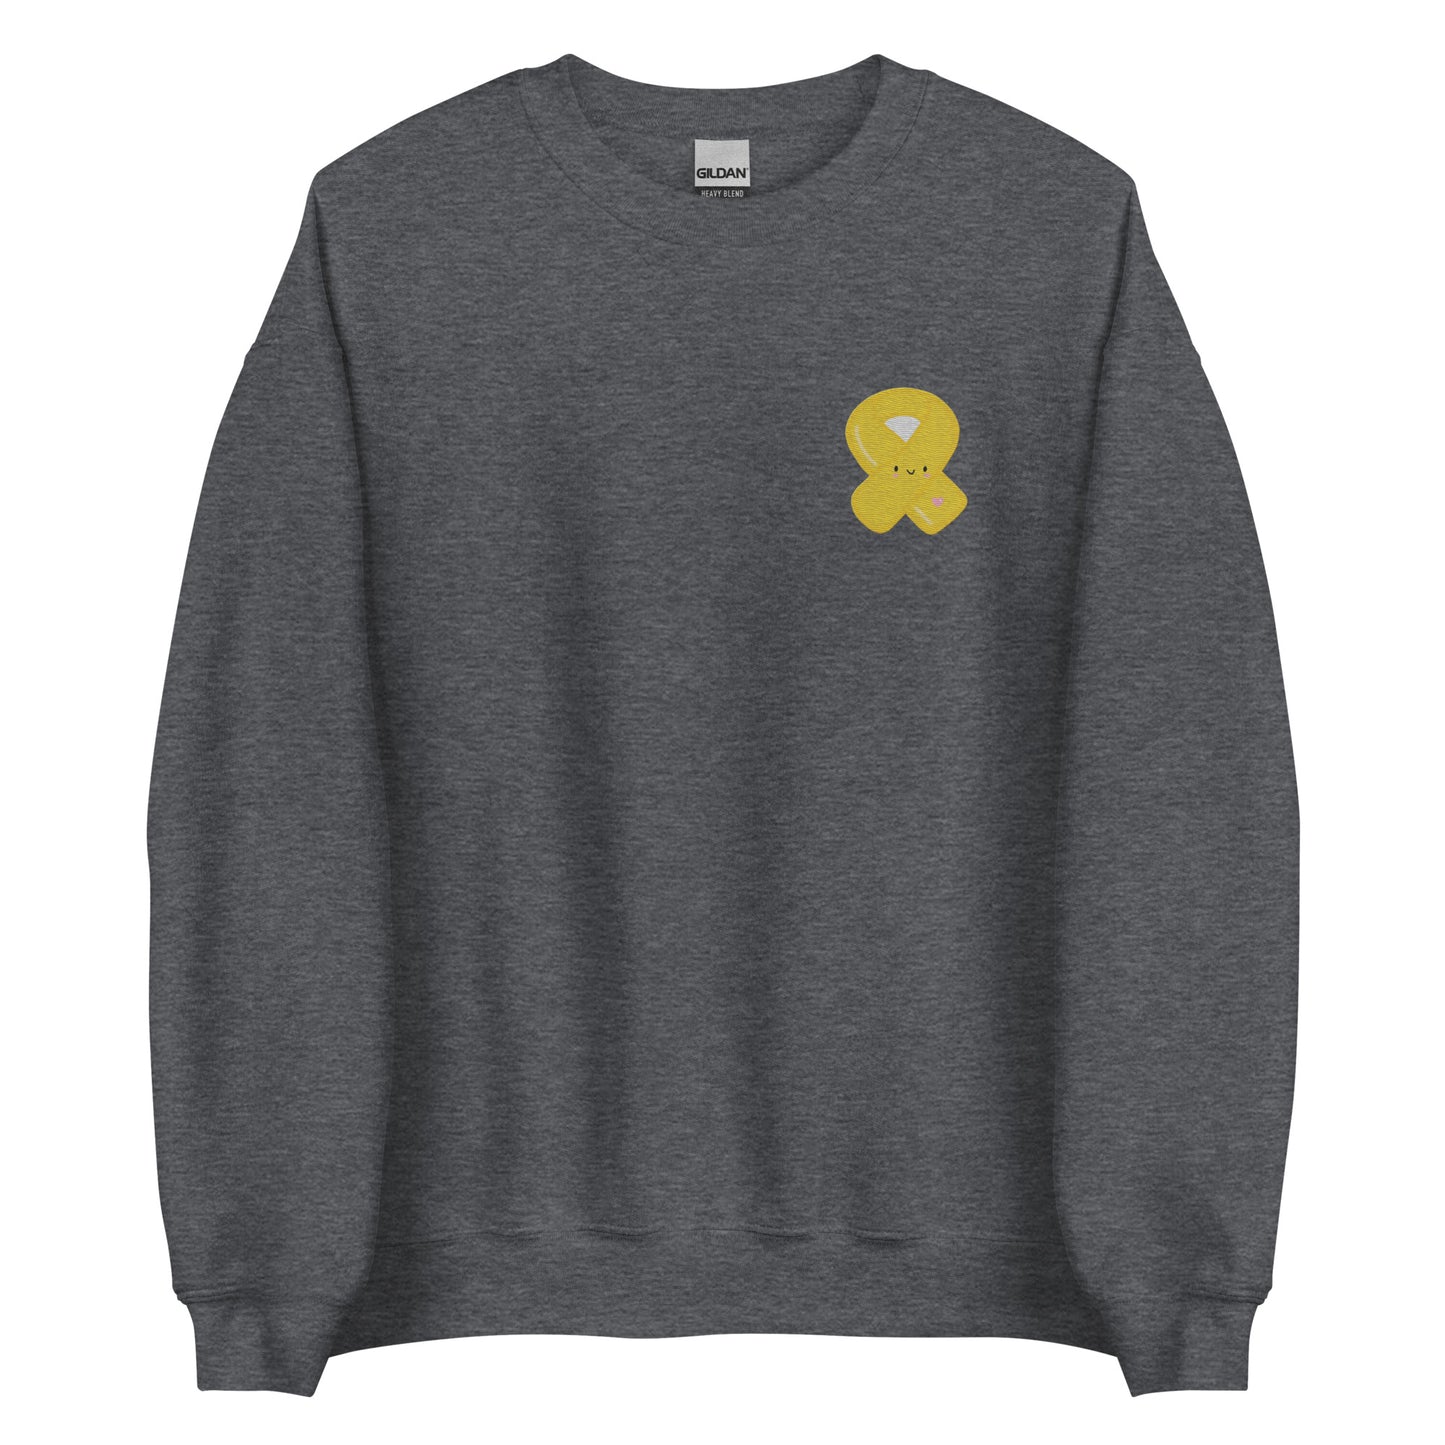 GOLD RIBBON Embroidered Unisex Sweatshirt